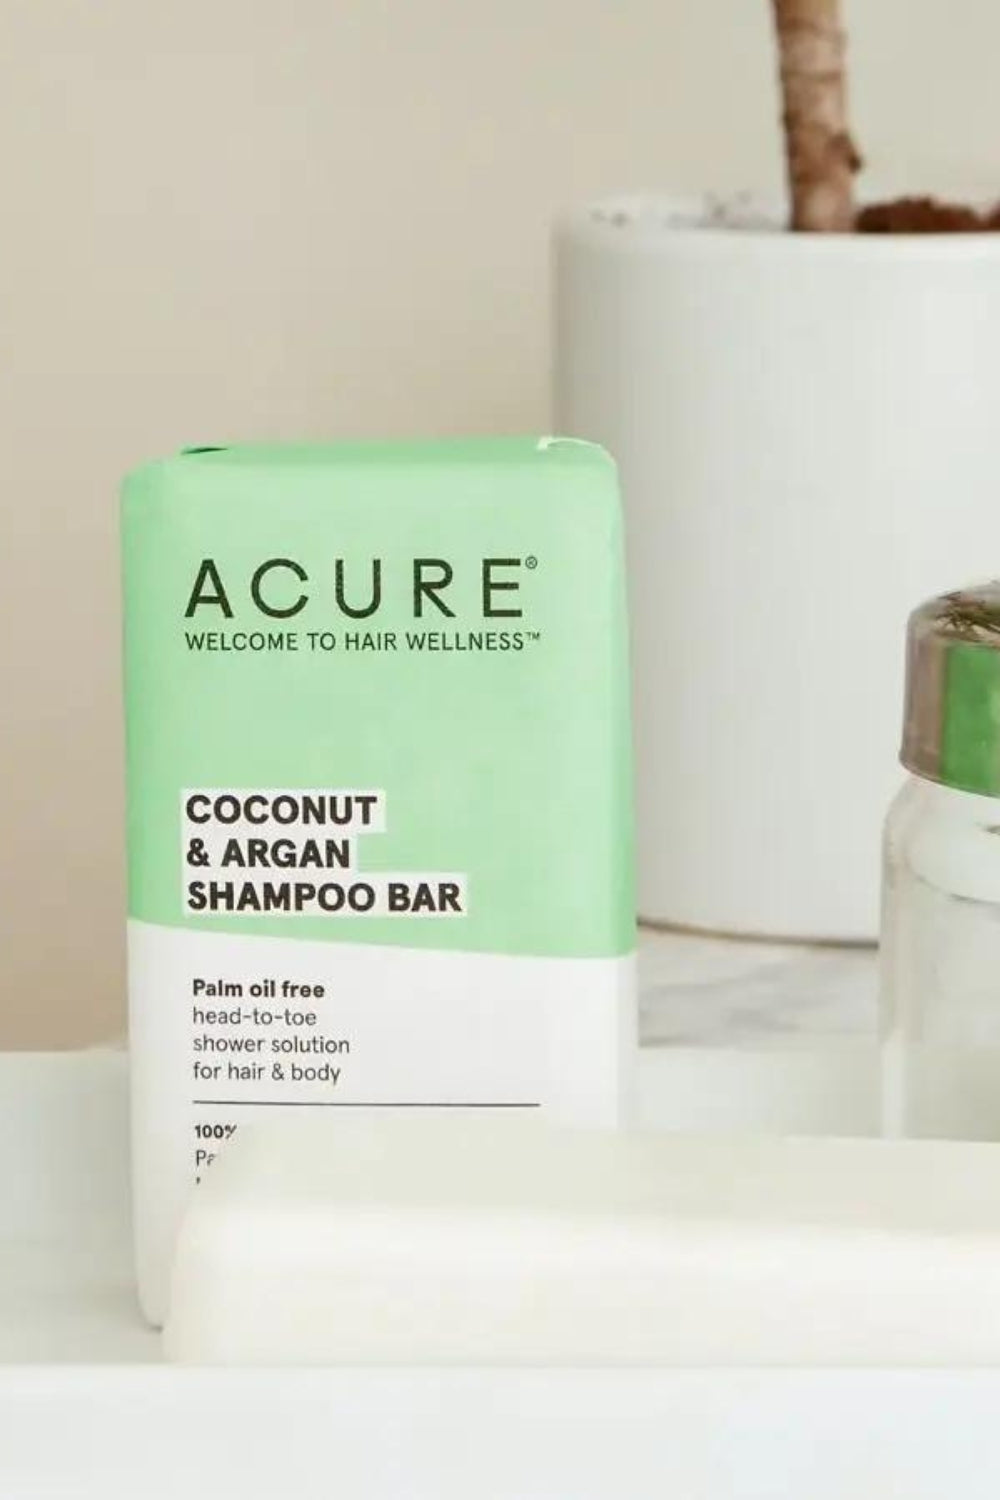 Acure - Coconut & Argan Shampoo Bar - 140g